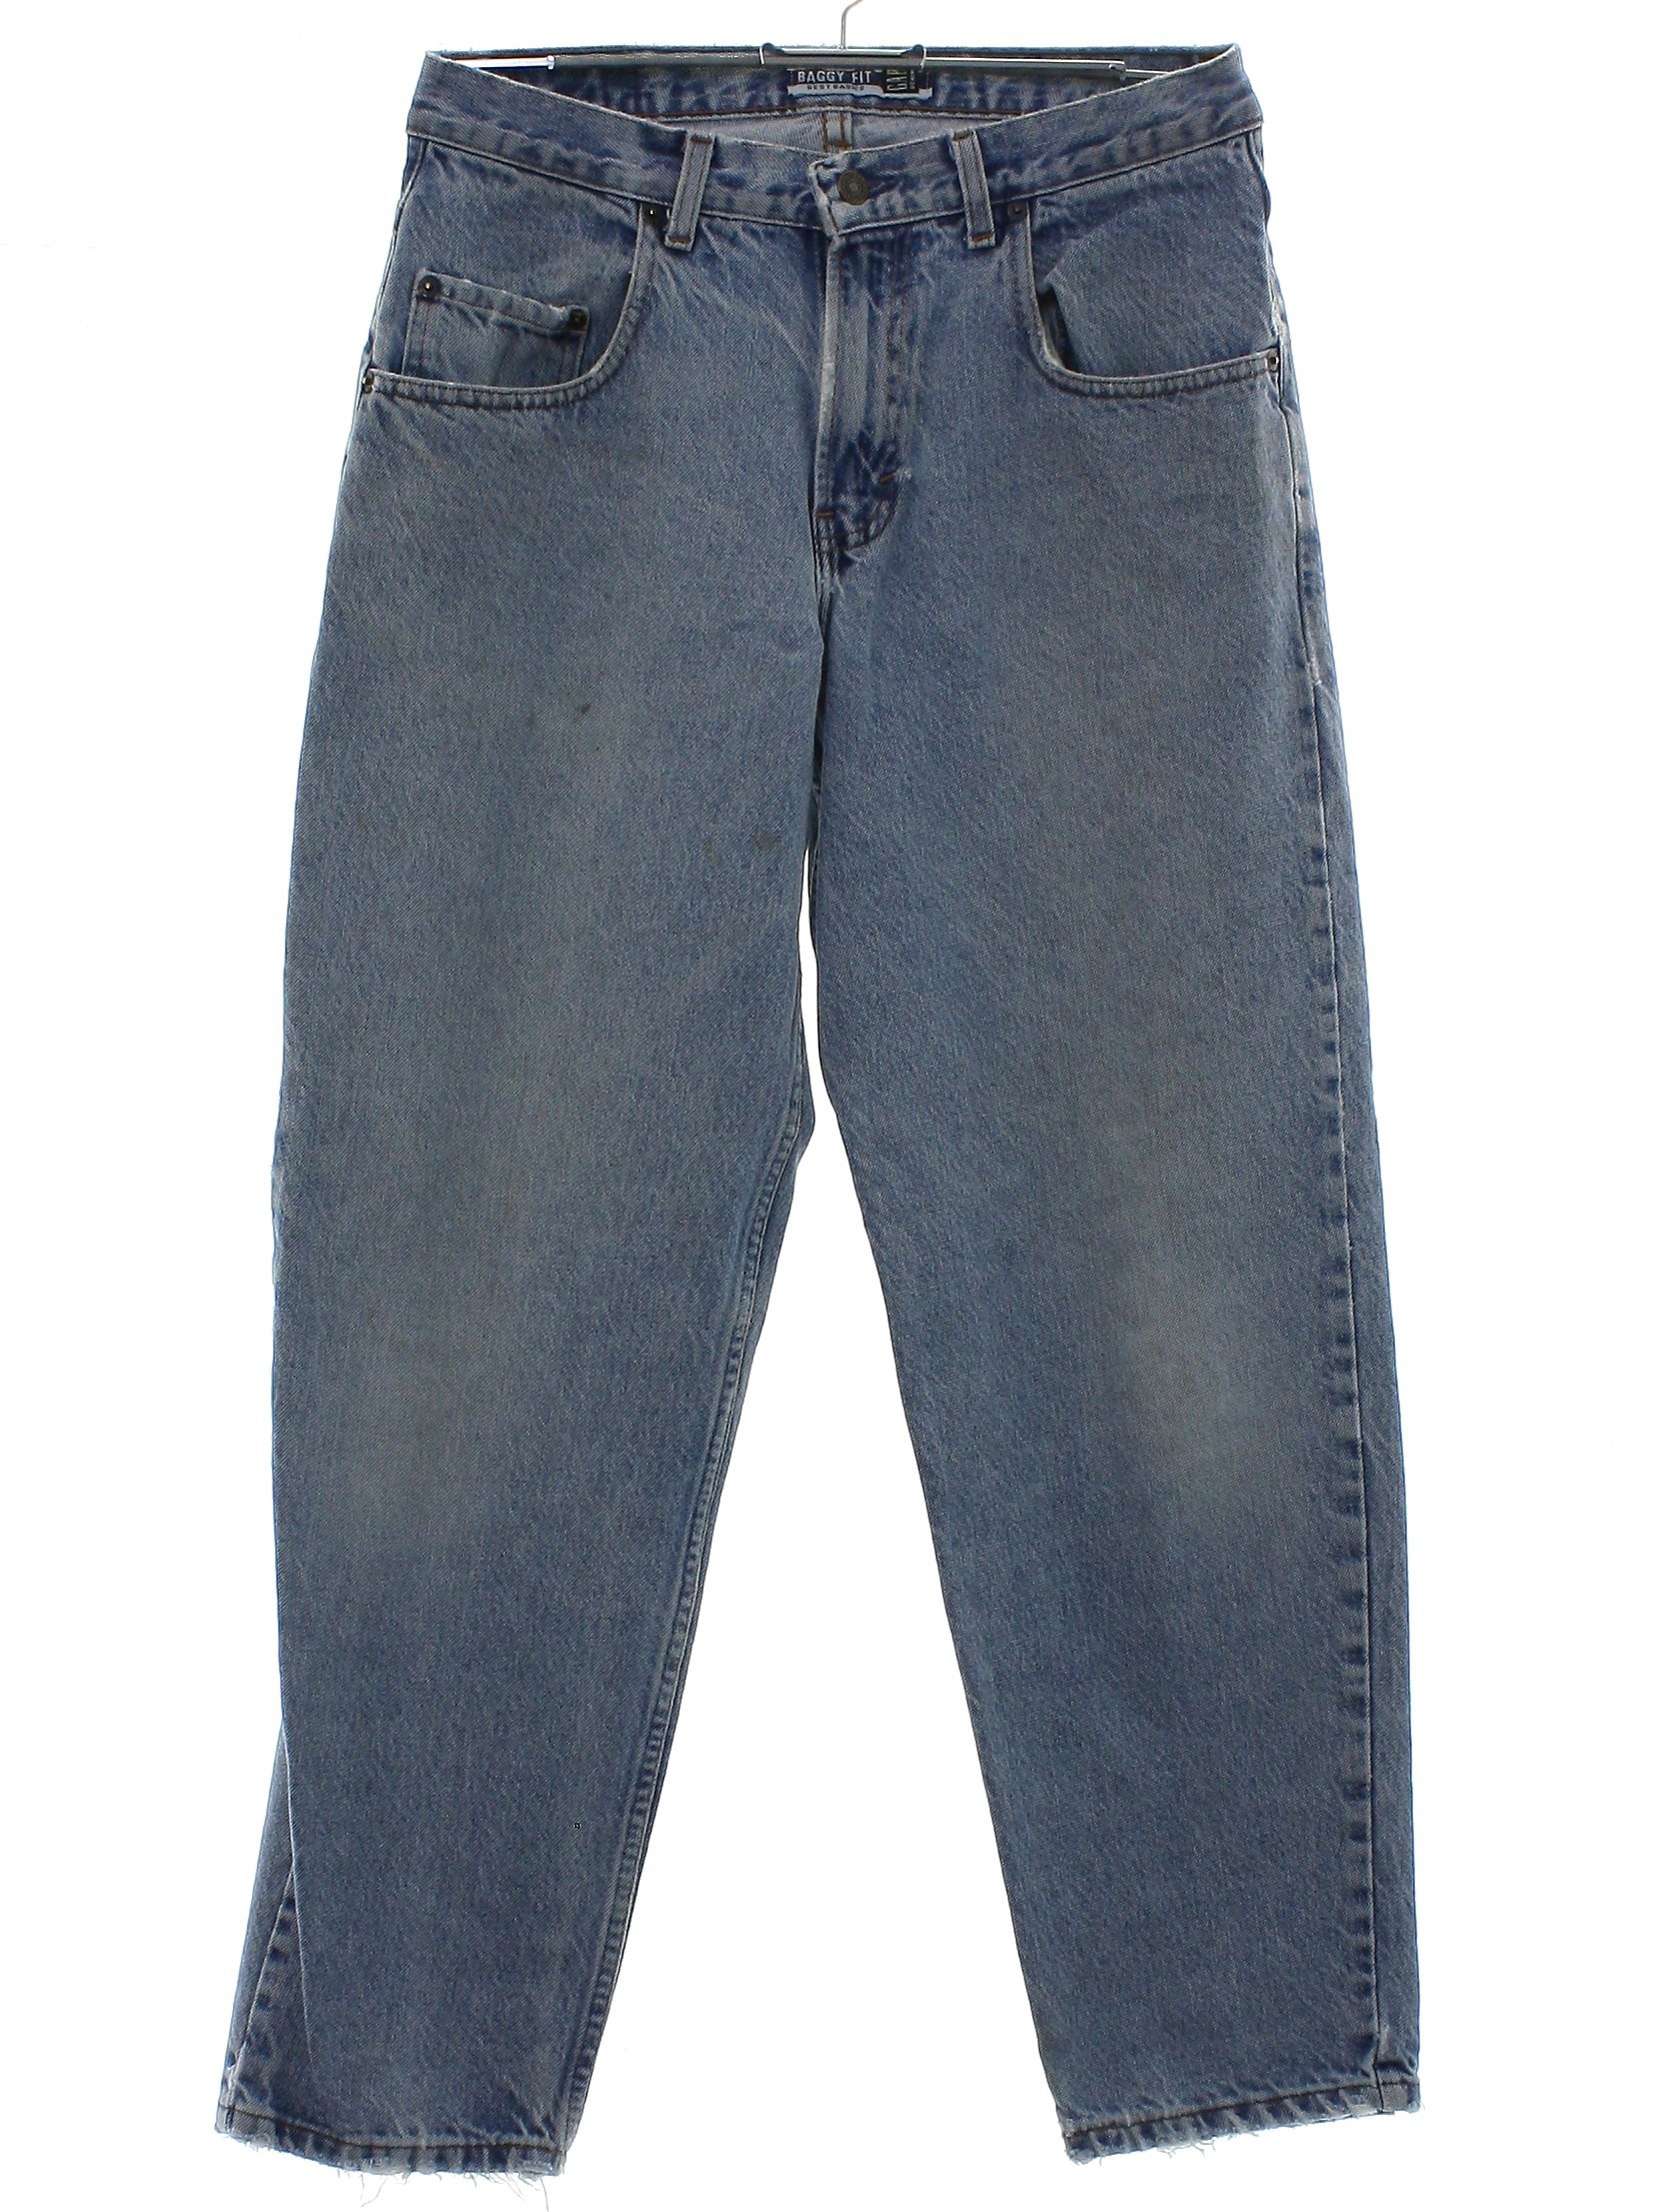 Vintage Gap Denim 1990s Pants: 90s -Gap Denim- Mens faded and worn blue ...